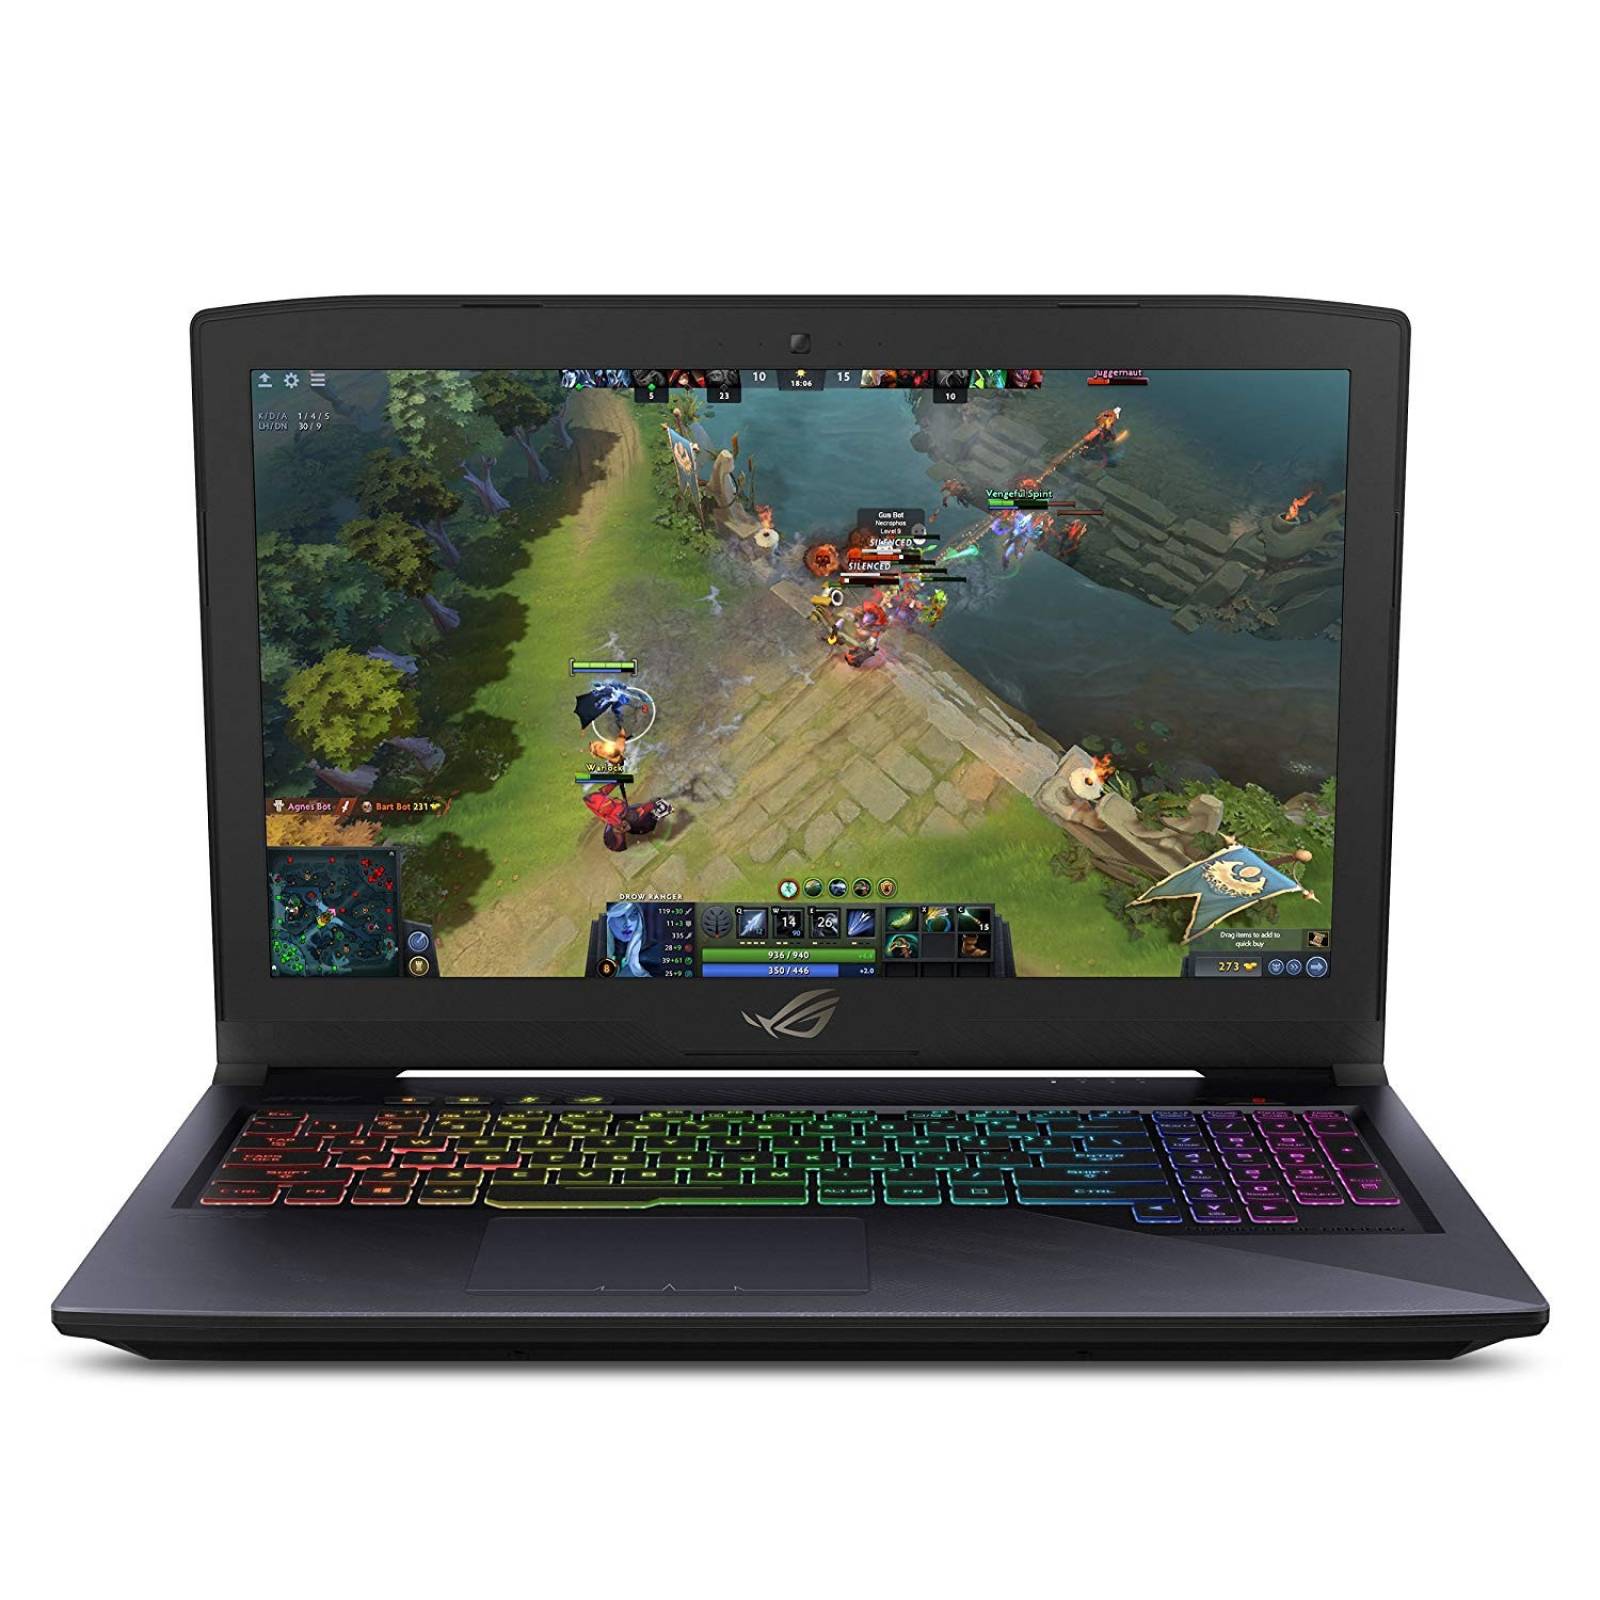 Laptop Gamer Asus ROG Strix GL503 15.6 i7 256GB 1TB GTX1060